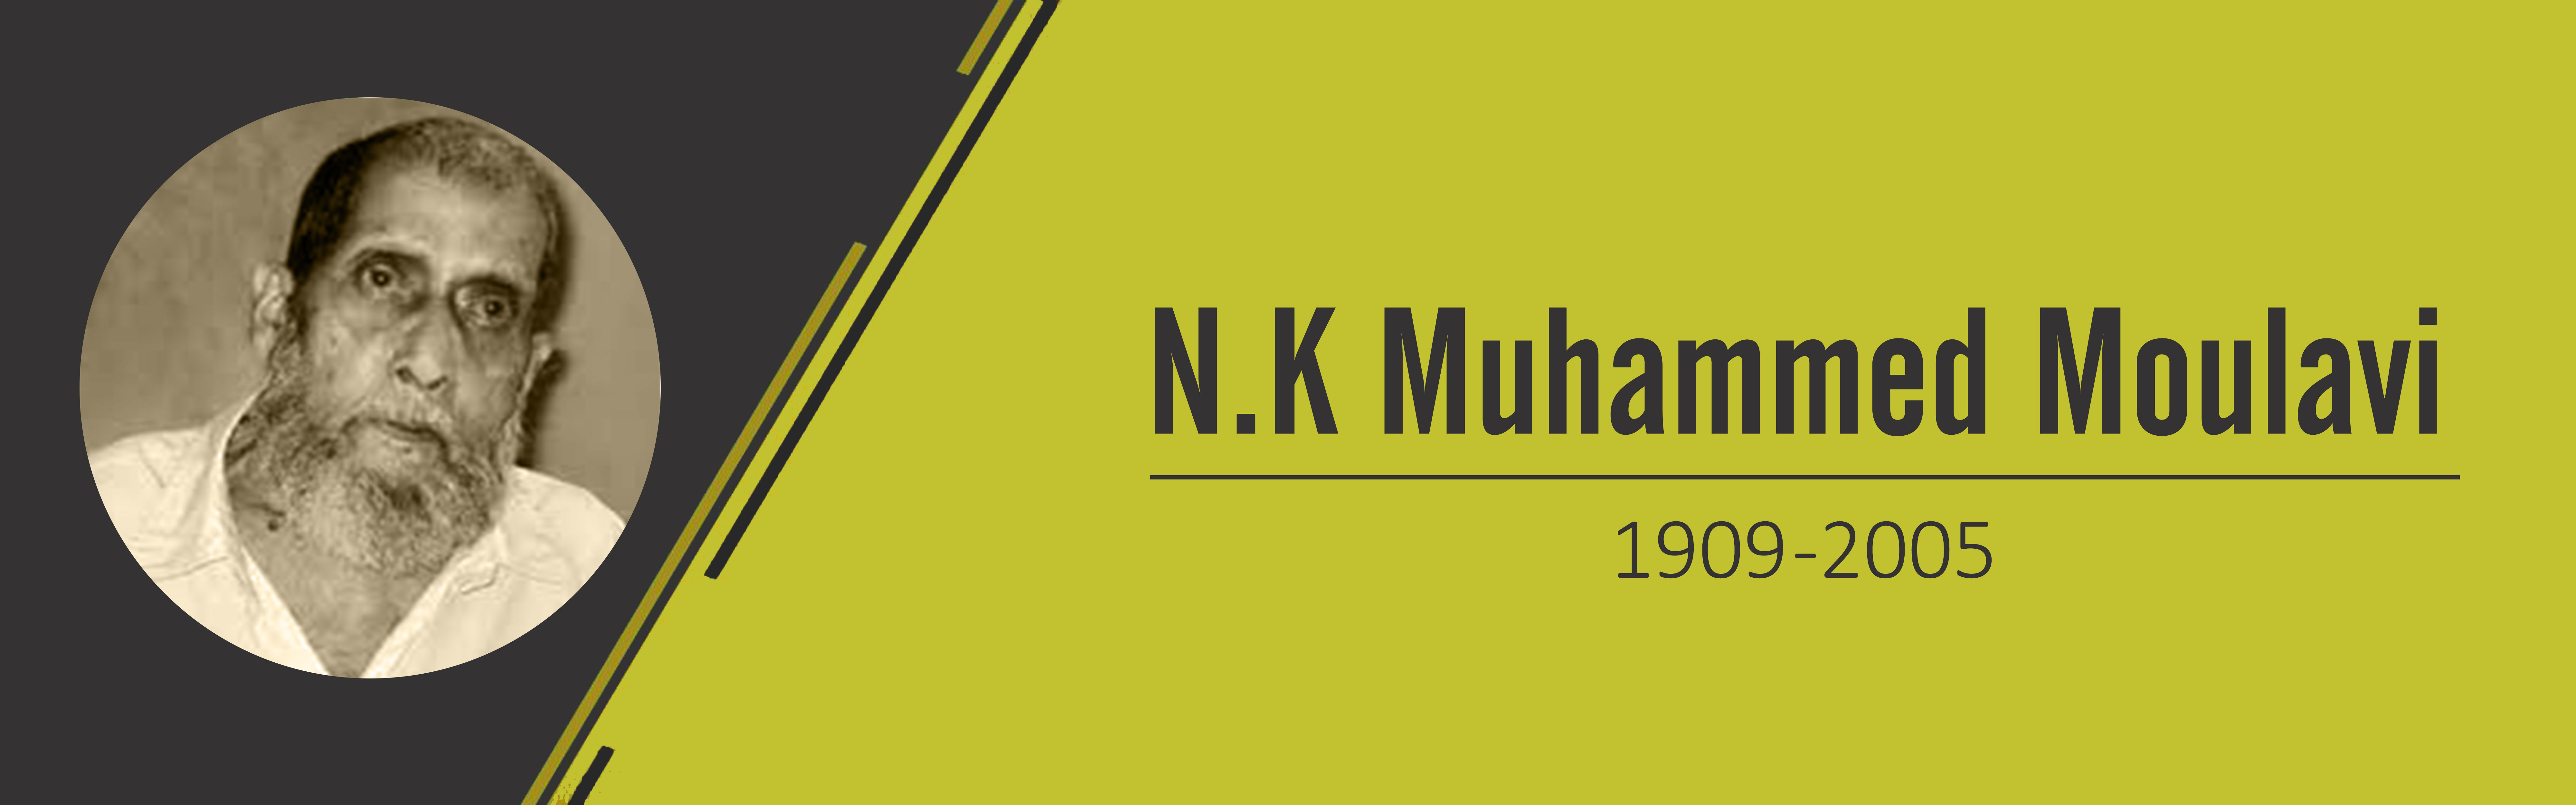 NK Muhammed Moulavi